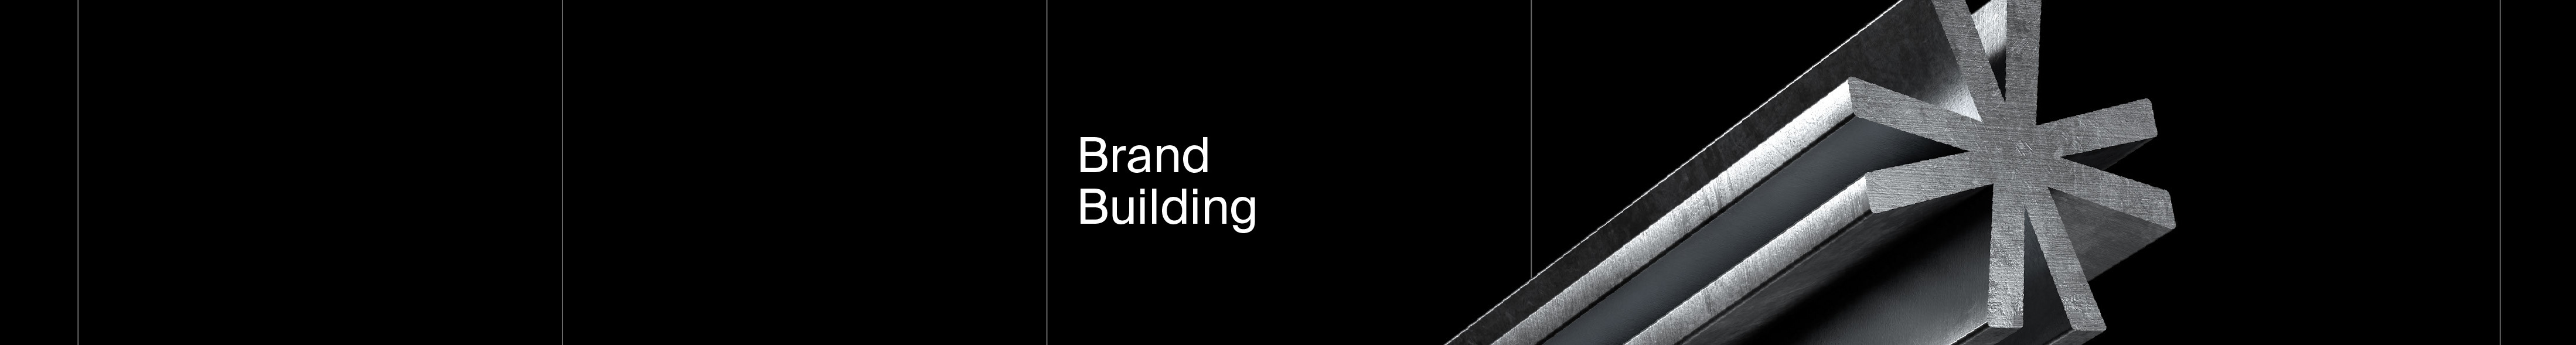 VXLAB Brand Building's profile banner